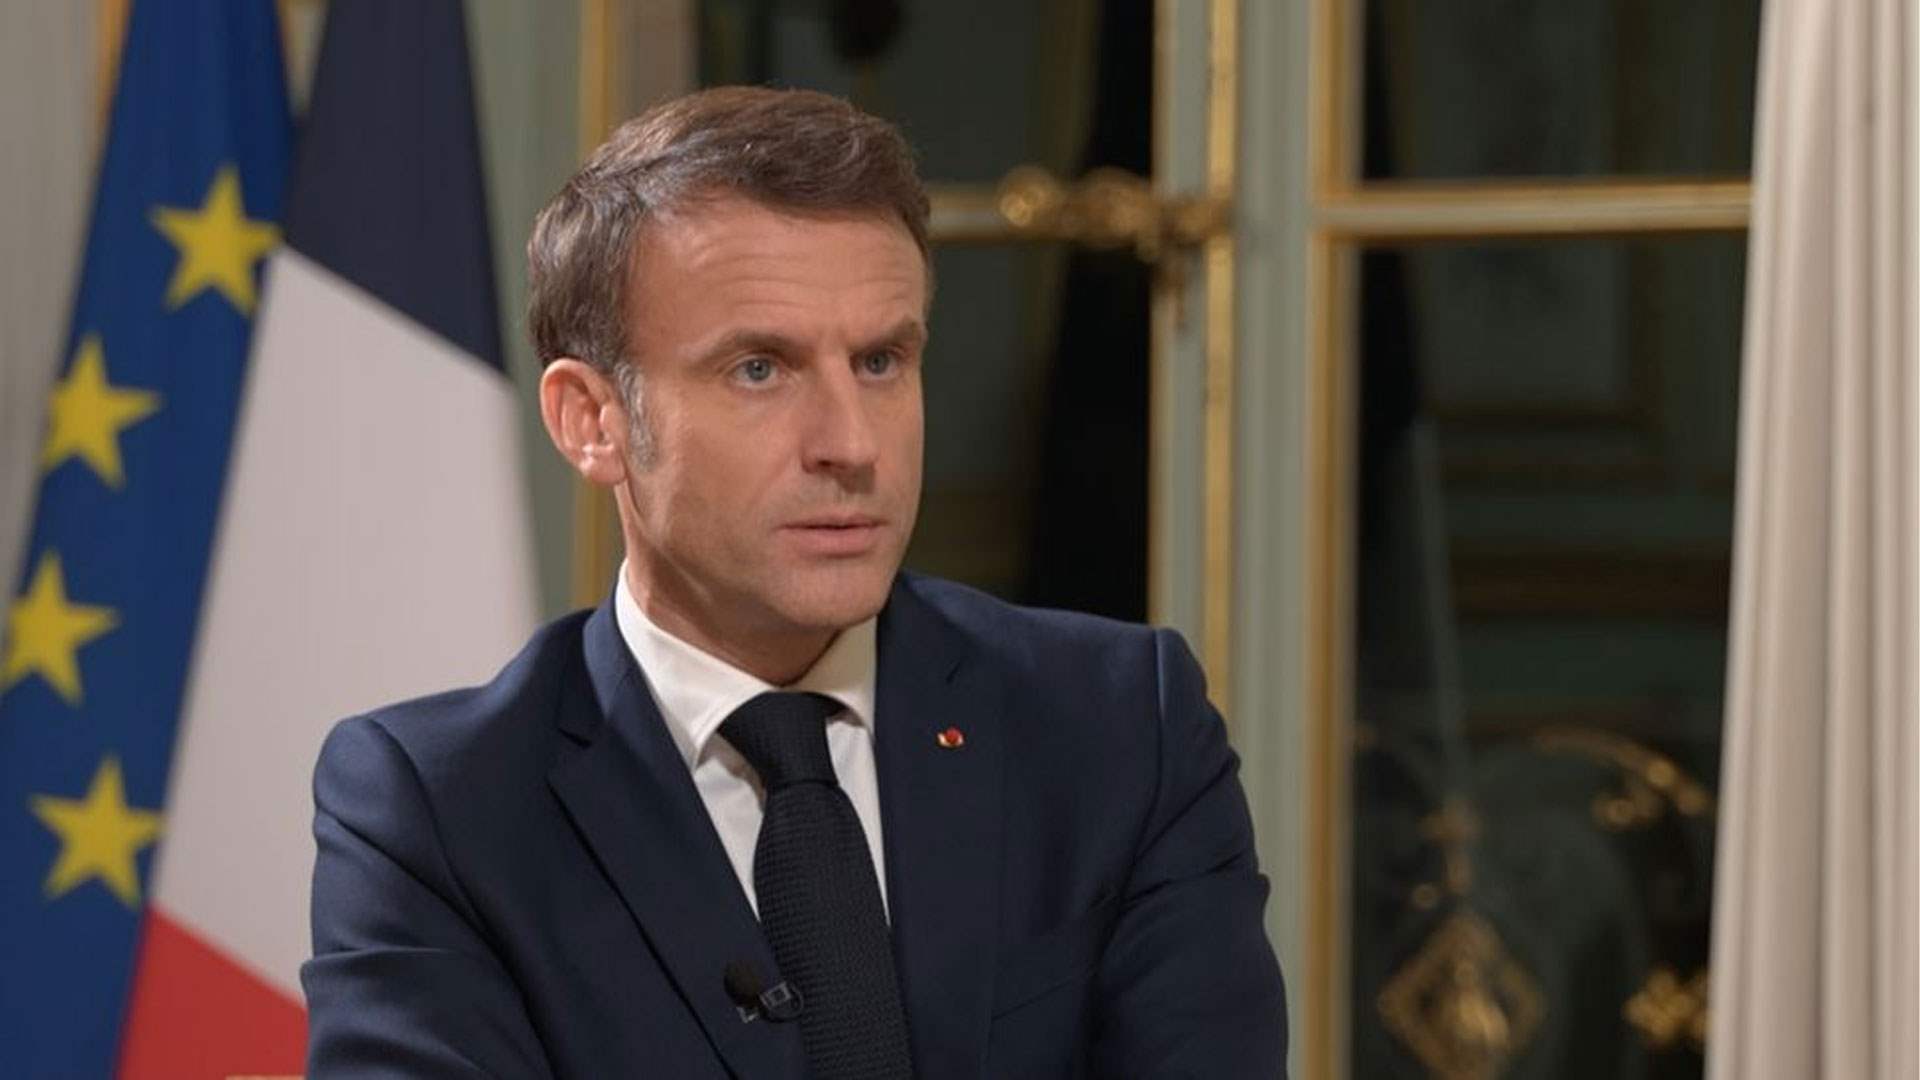 Macron condemns “unbearable resurgence of anti-Semitism”